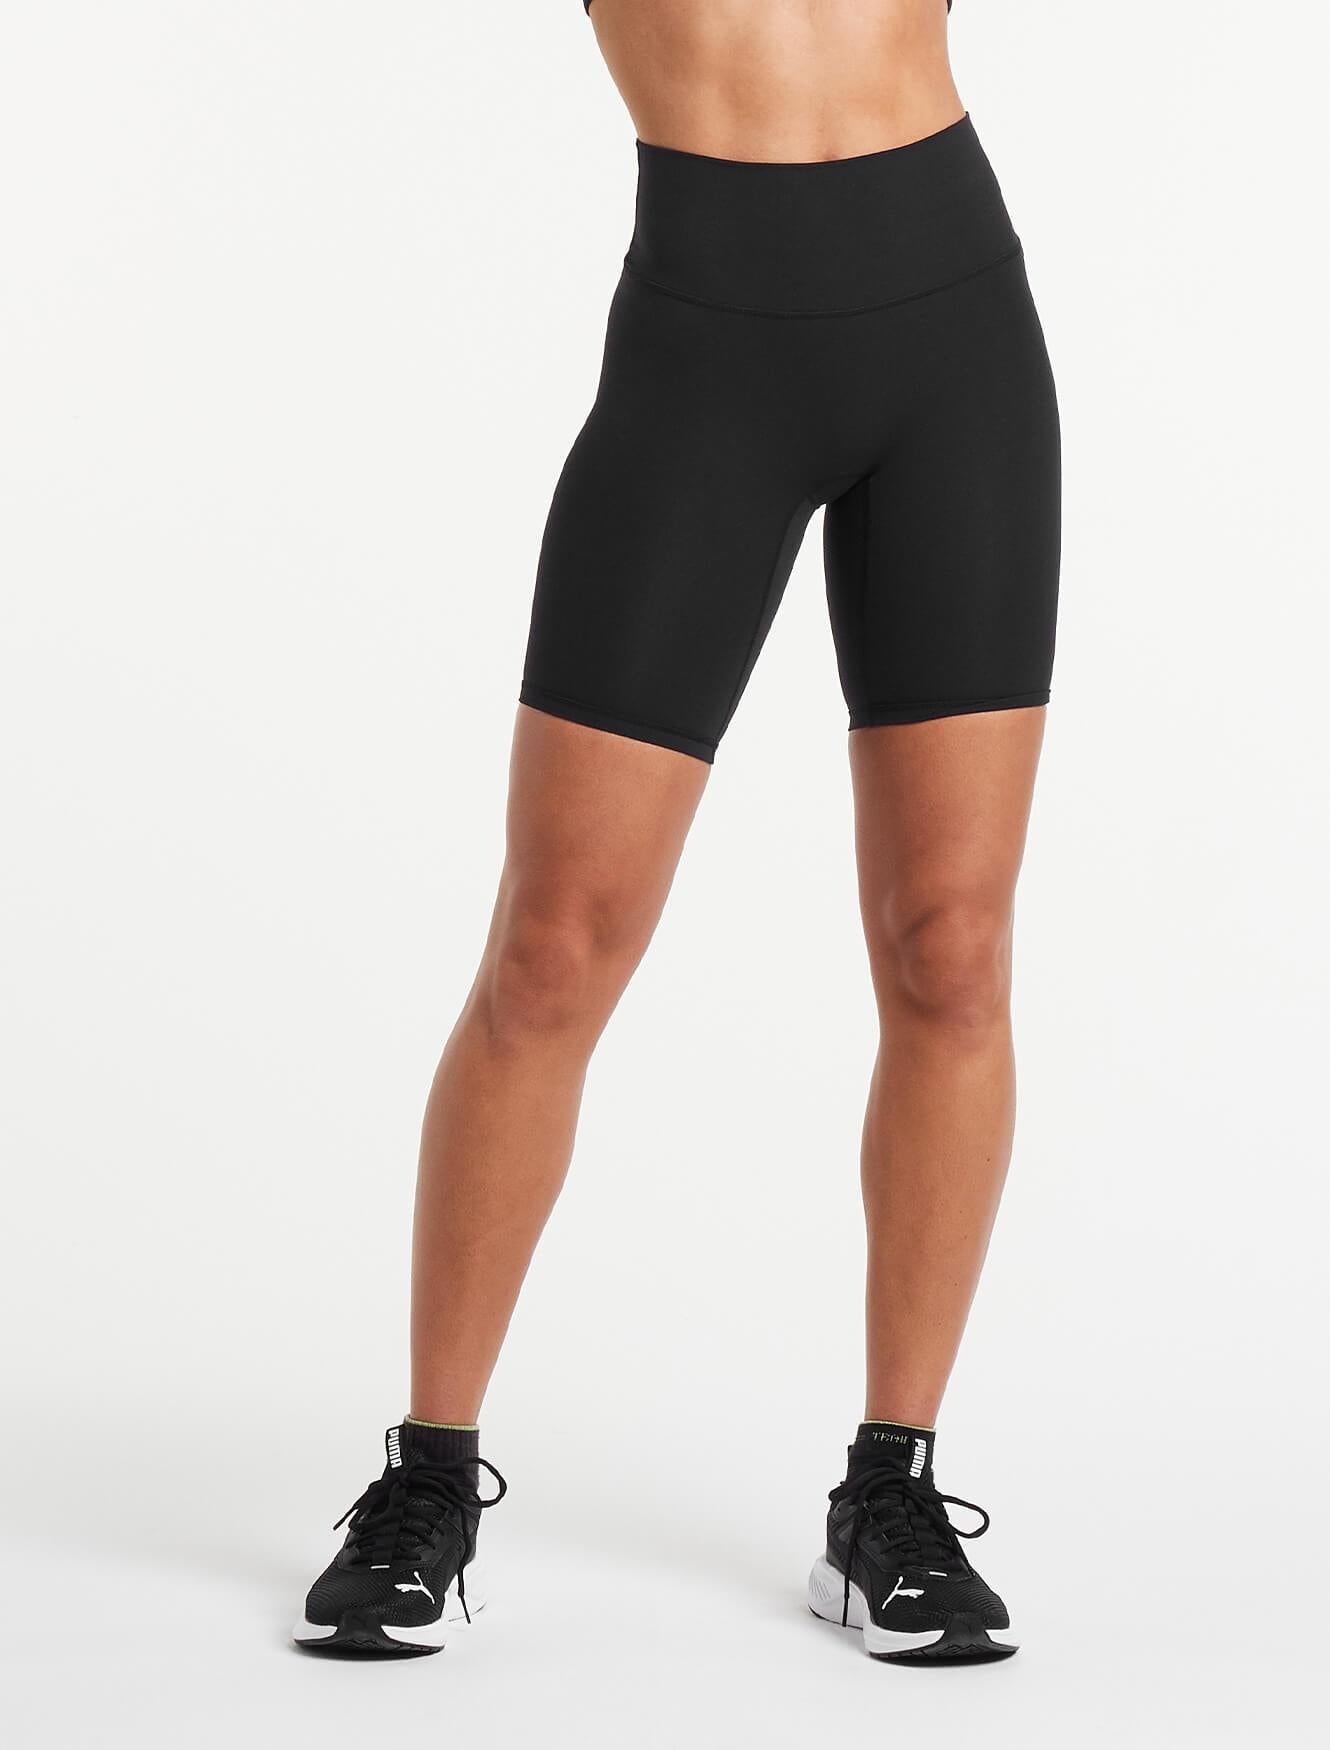 Pace Biker Shorts / Black Pursue Fitness 1